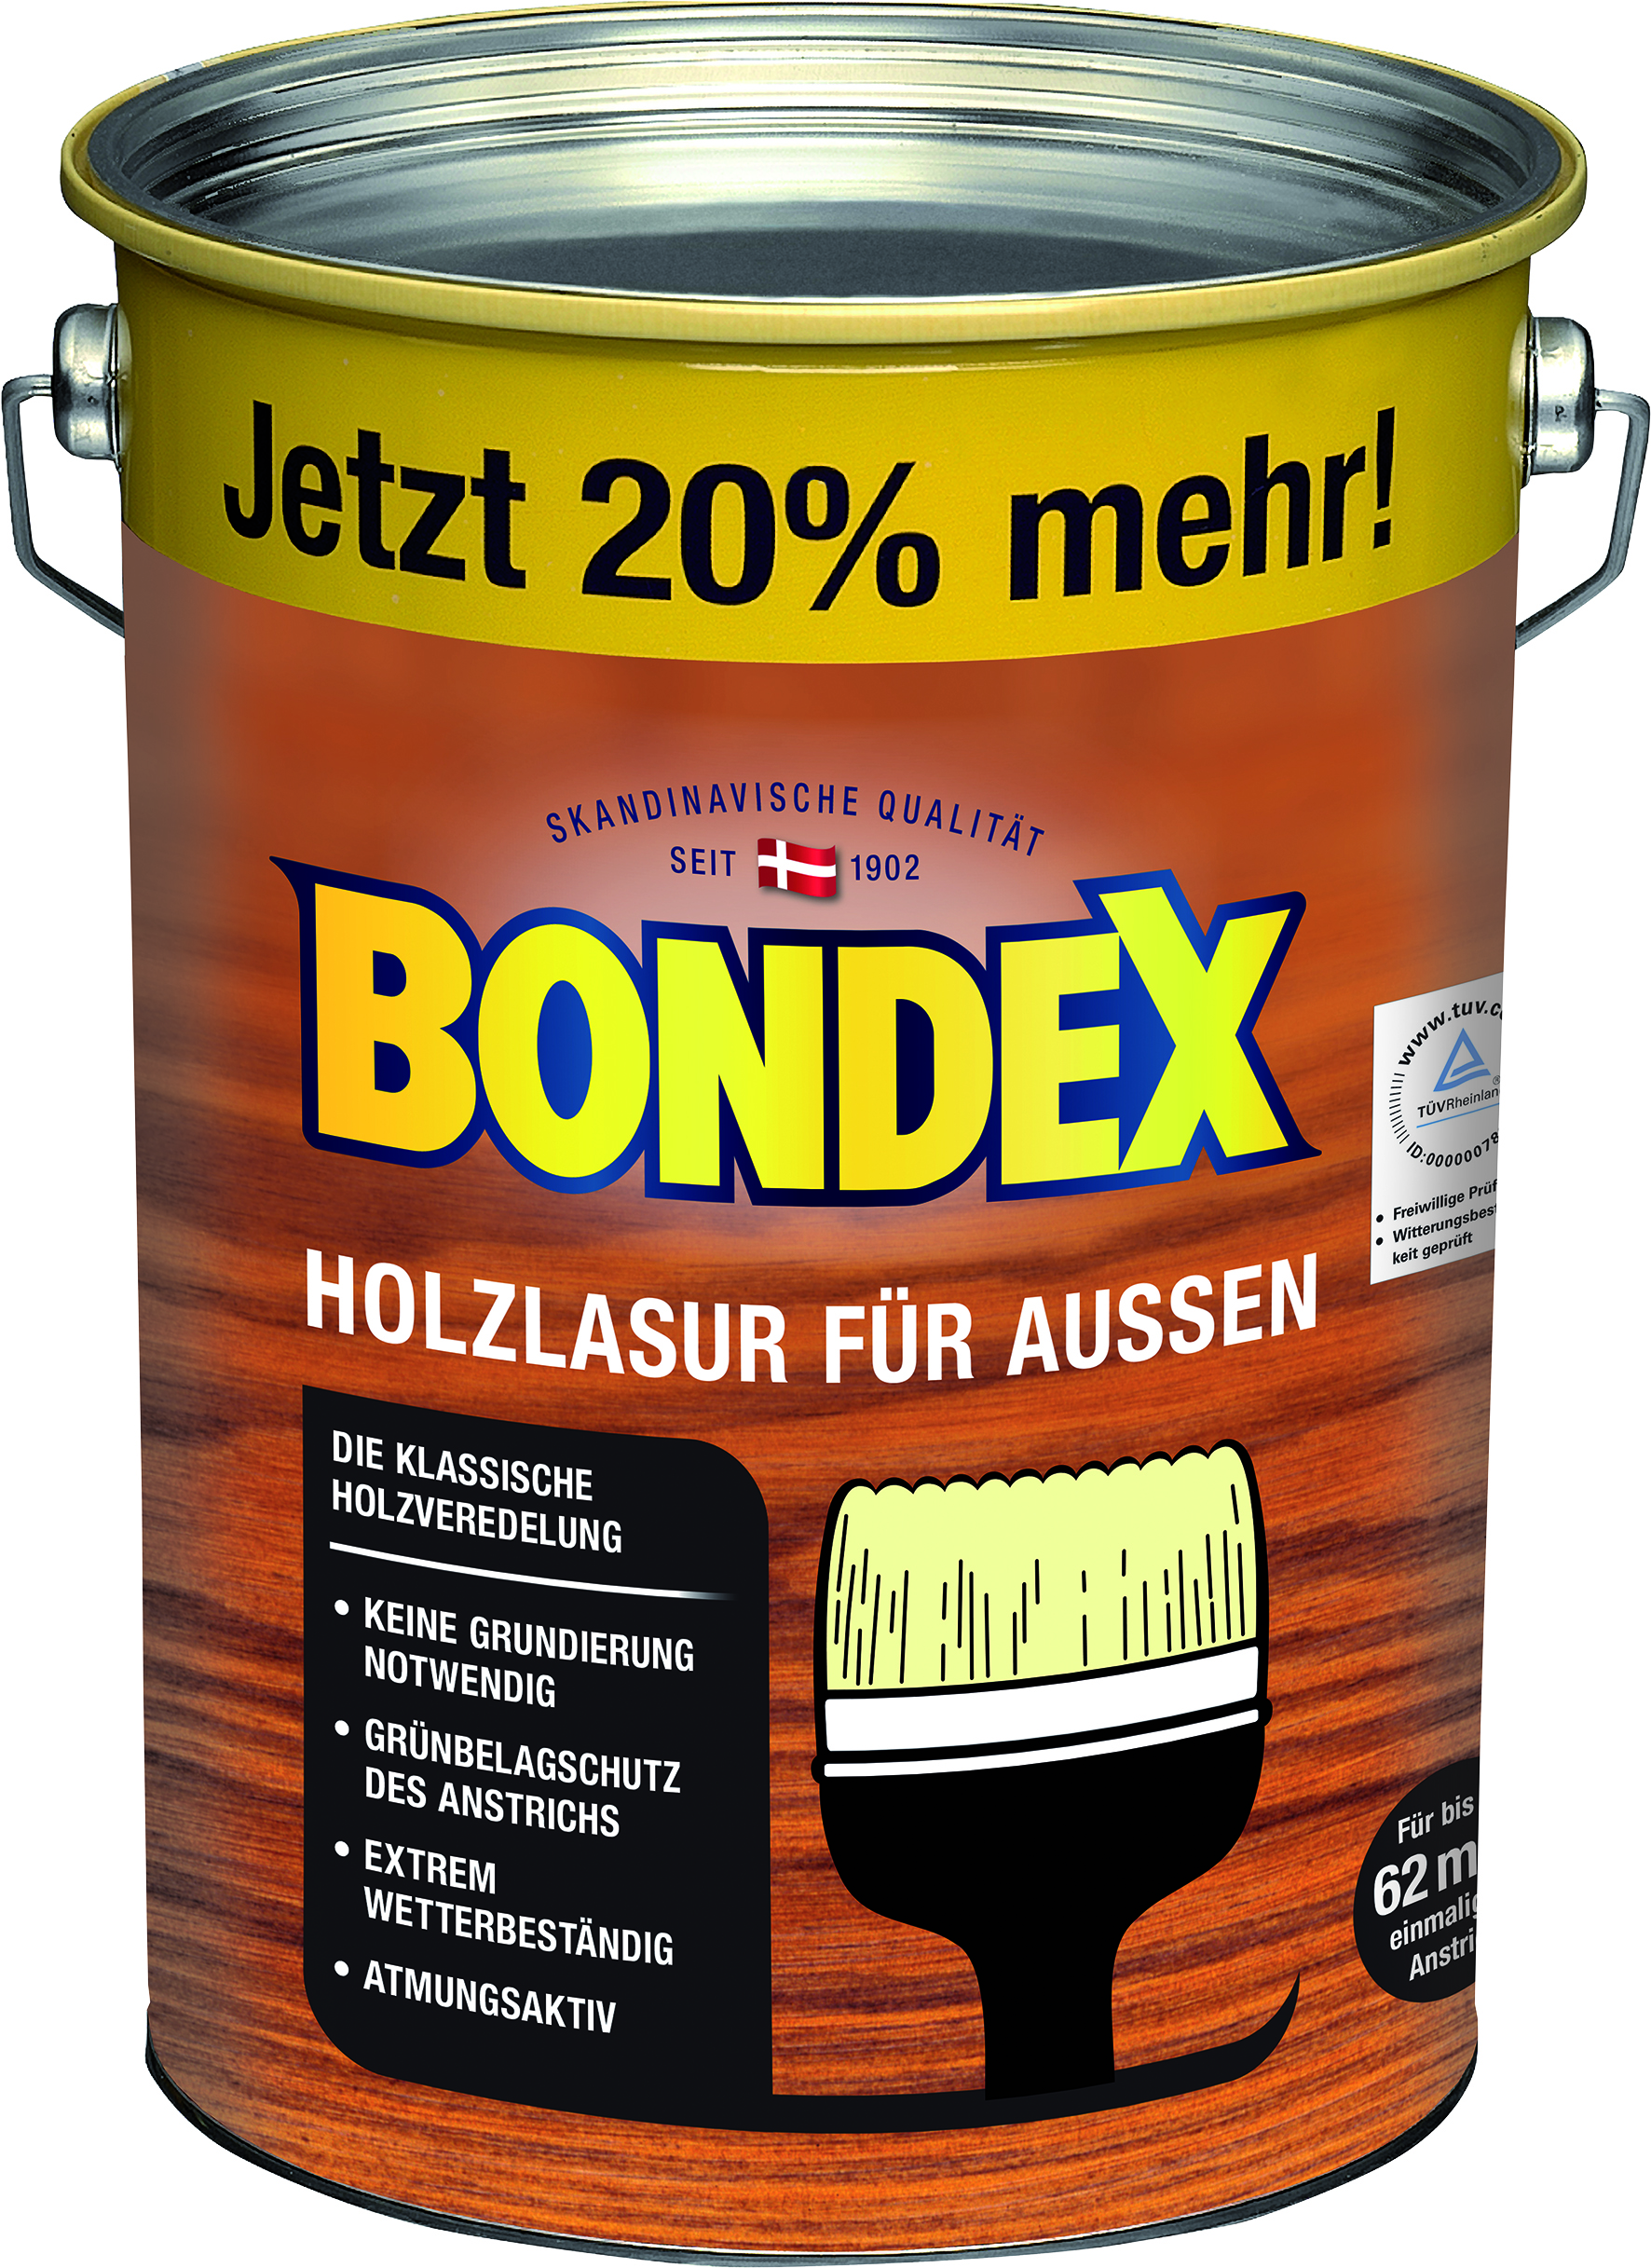 Bondex Holzlasur für Außen Kiefer, 4,8L